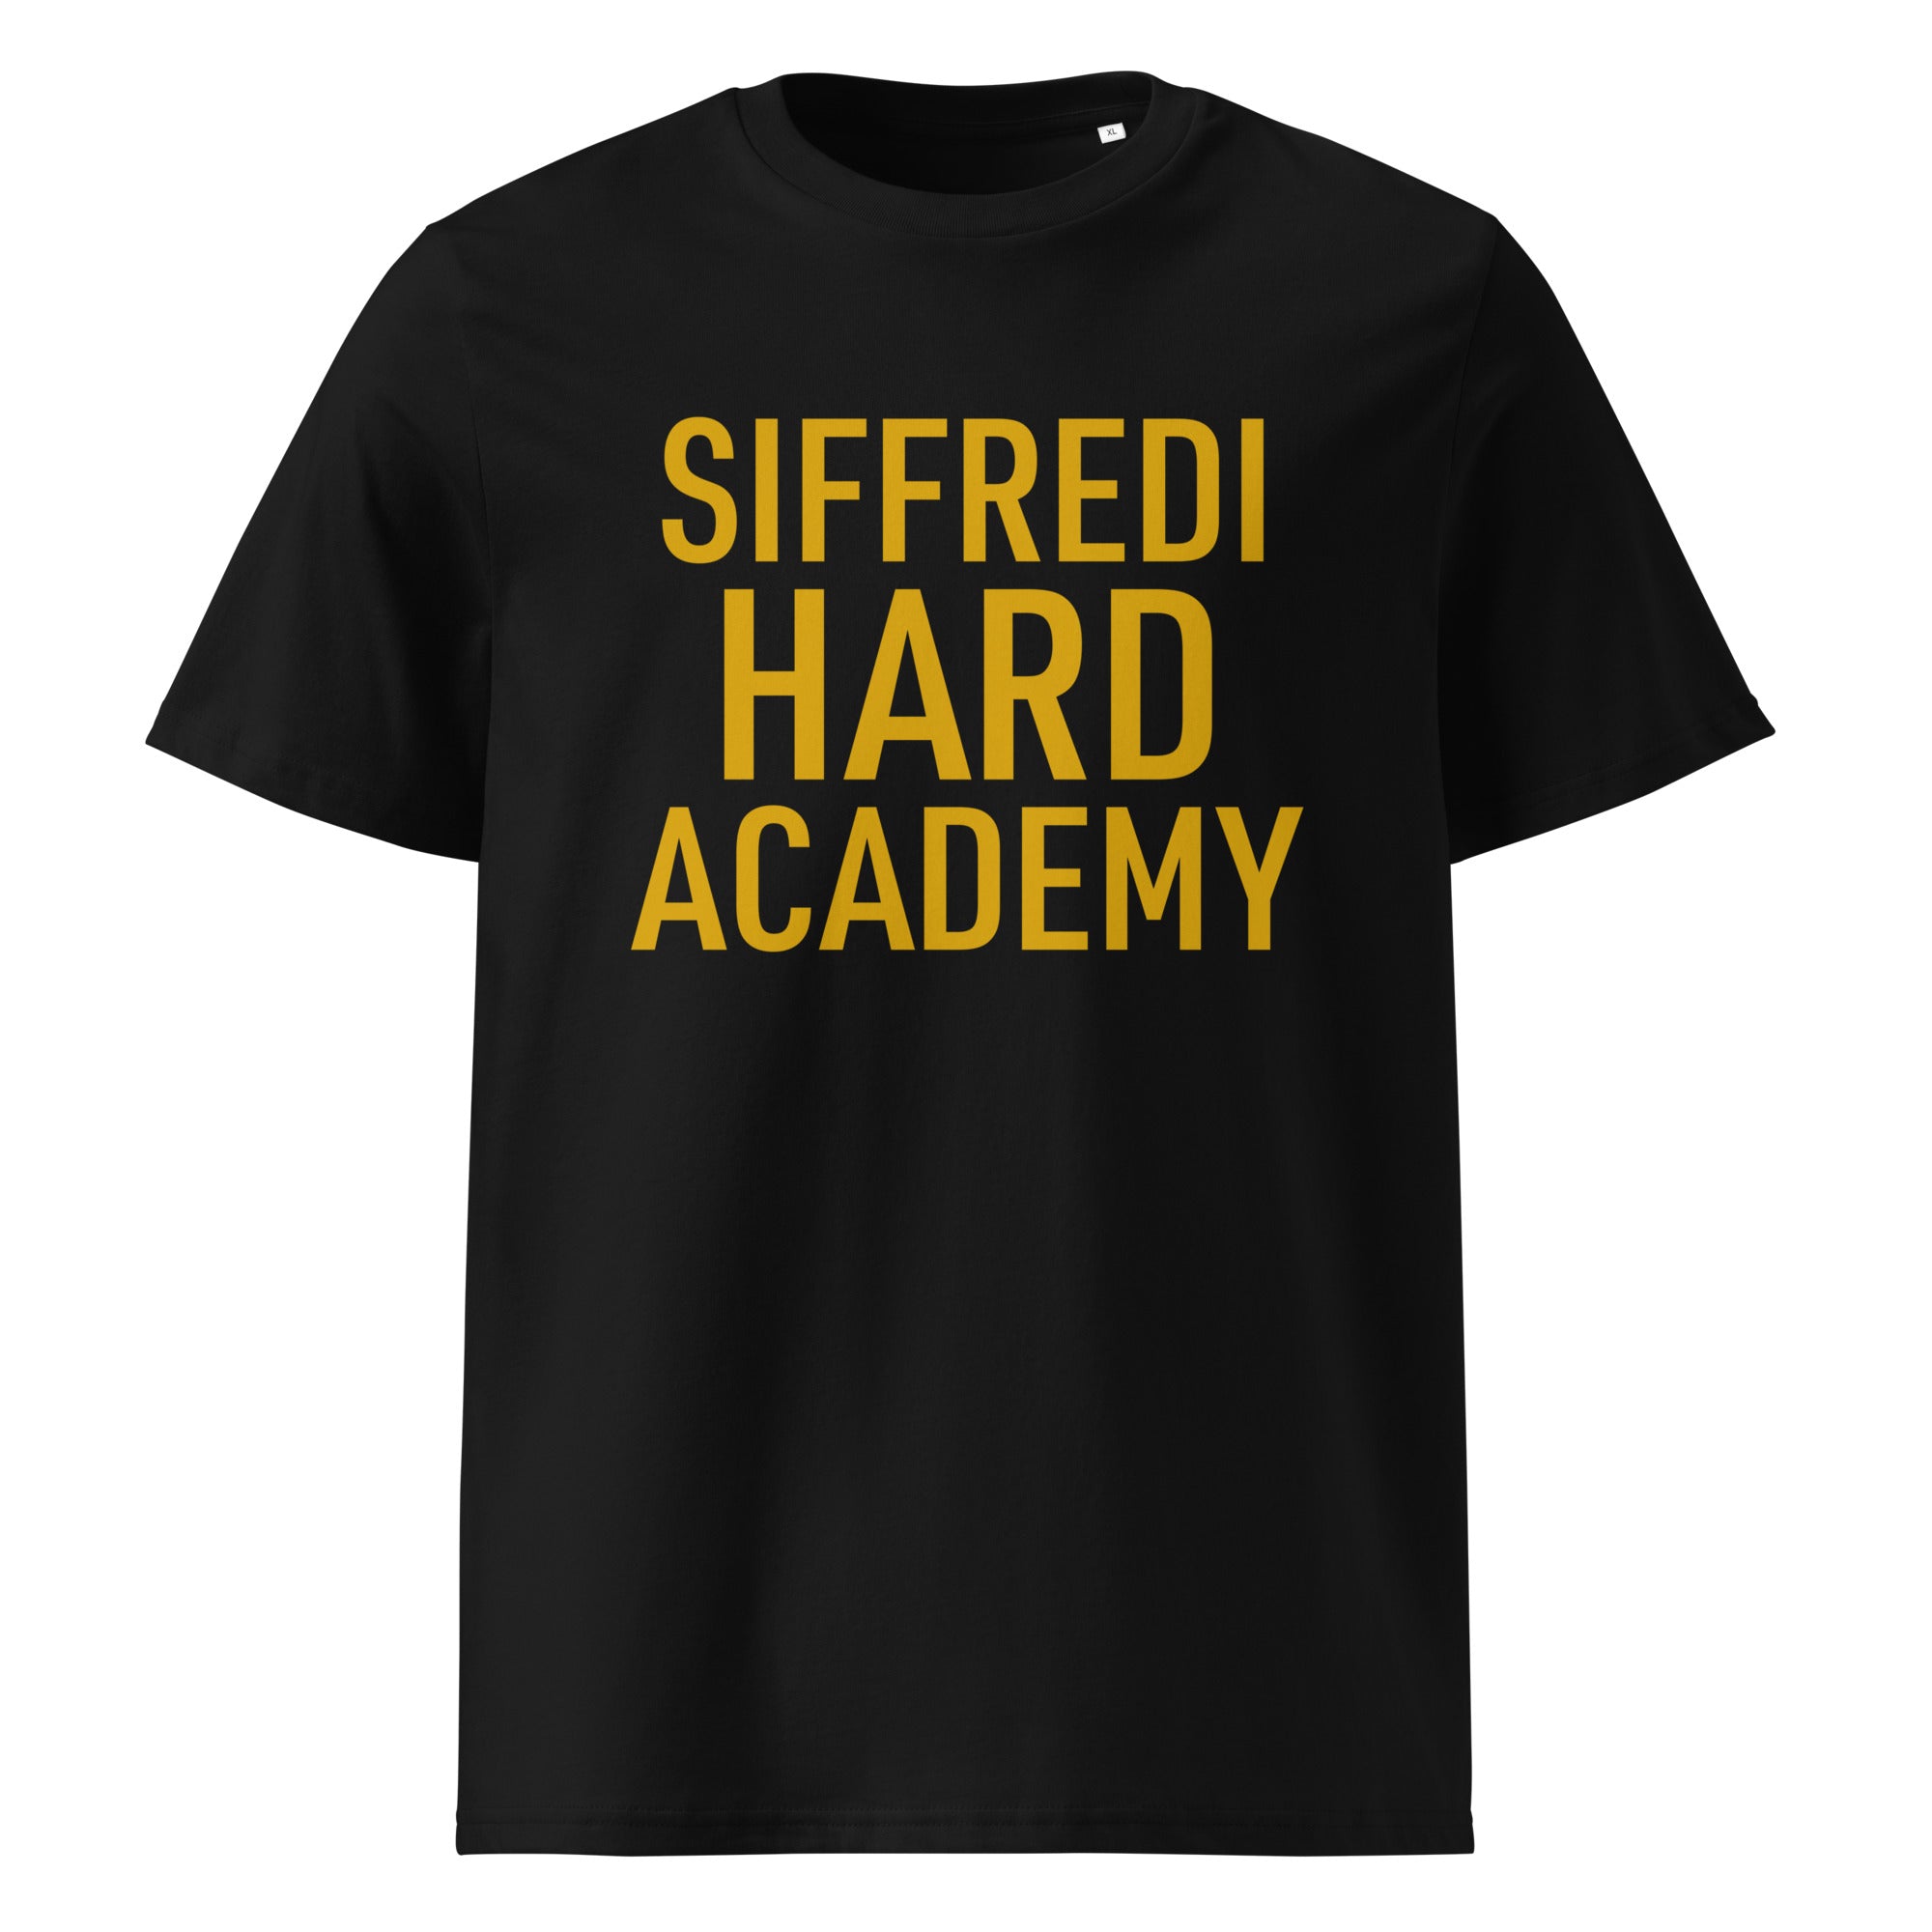 Siffredi Hard Academy Tee - Black